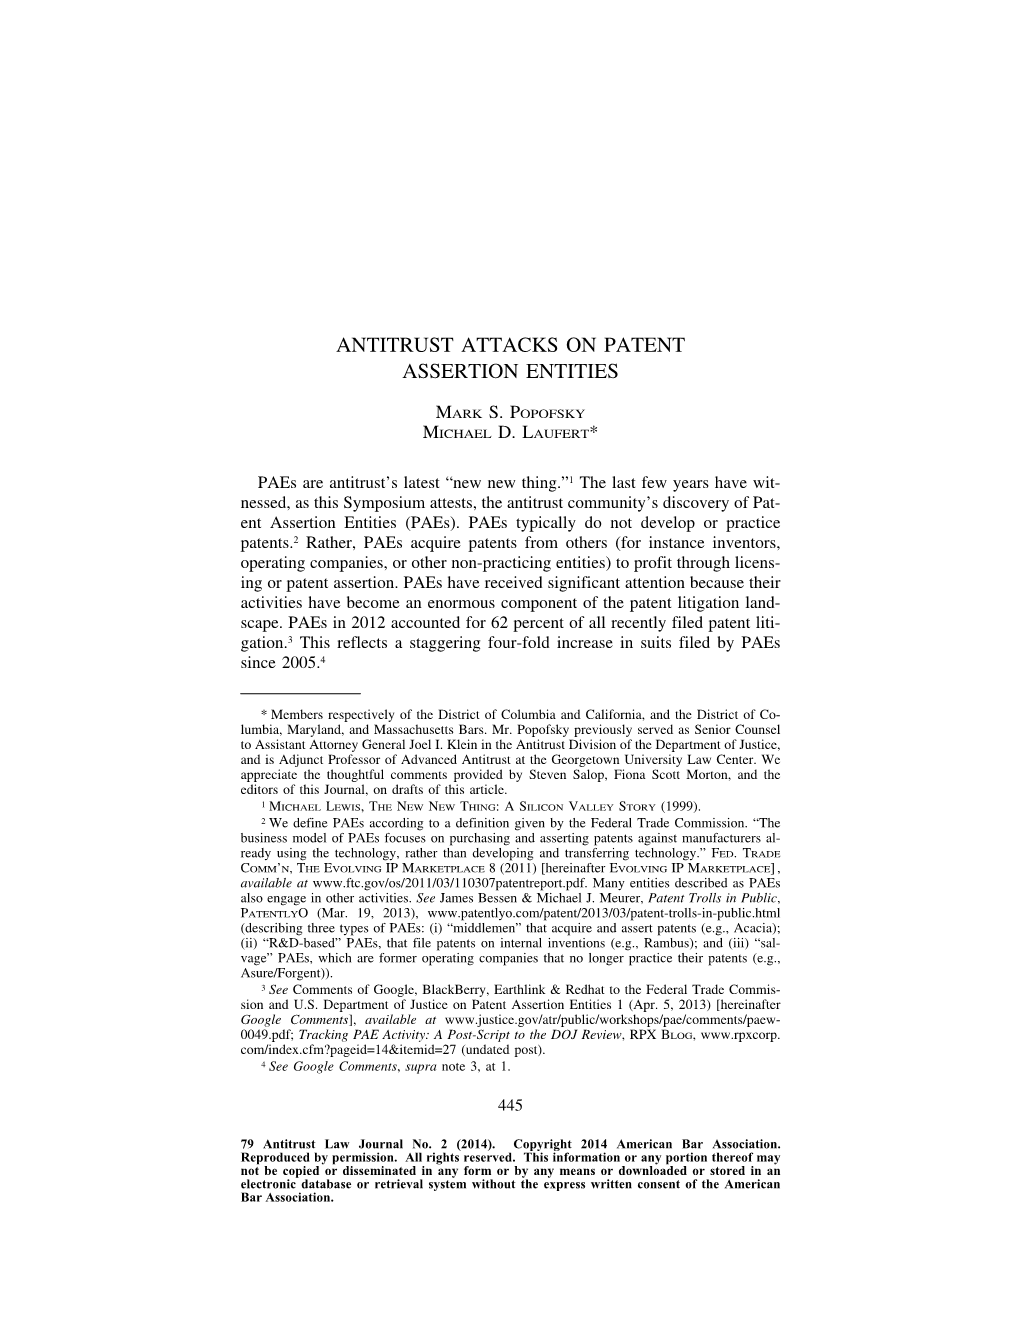 Antitrust Attacks on Patent Assertion Entities